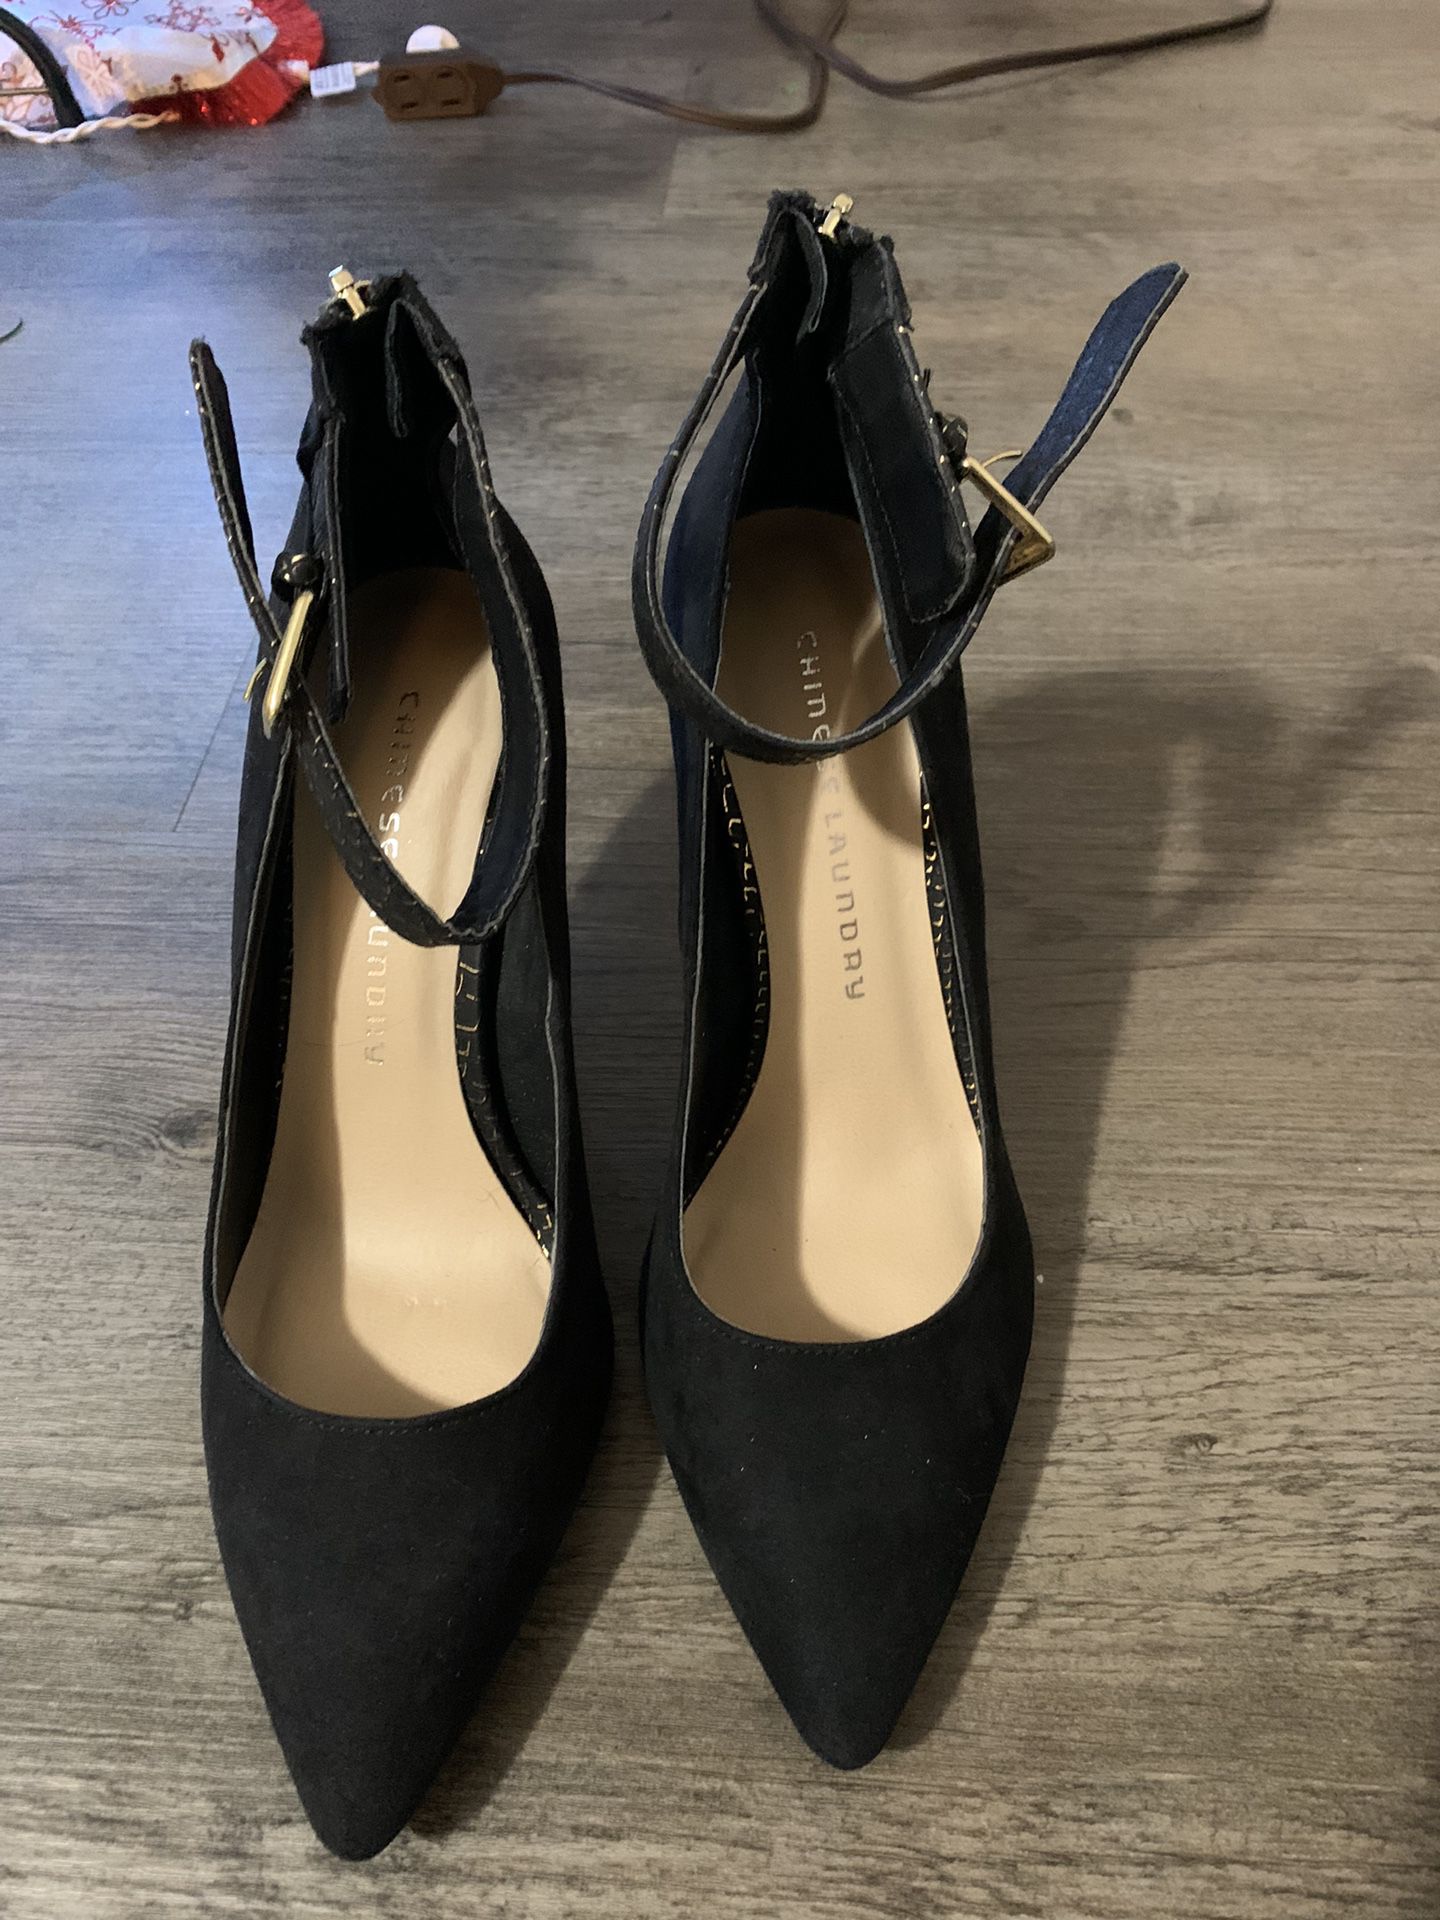 Size 9-10 Women’s Heels 